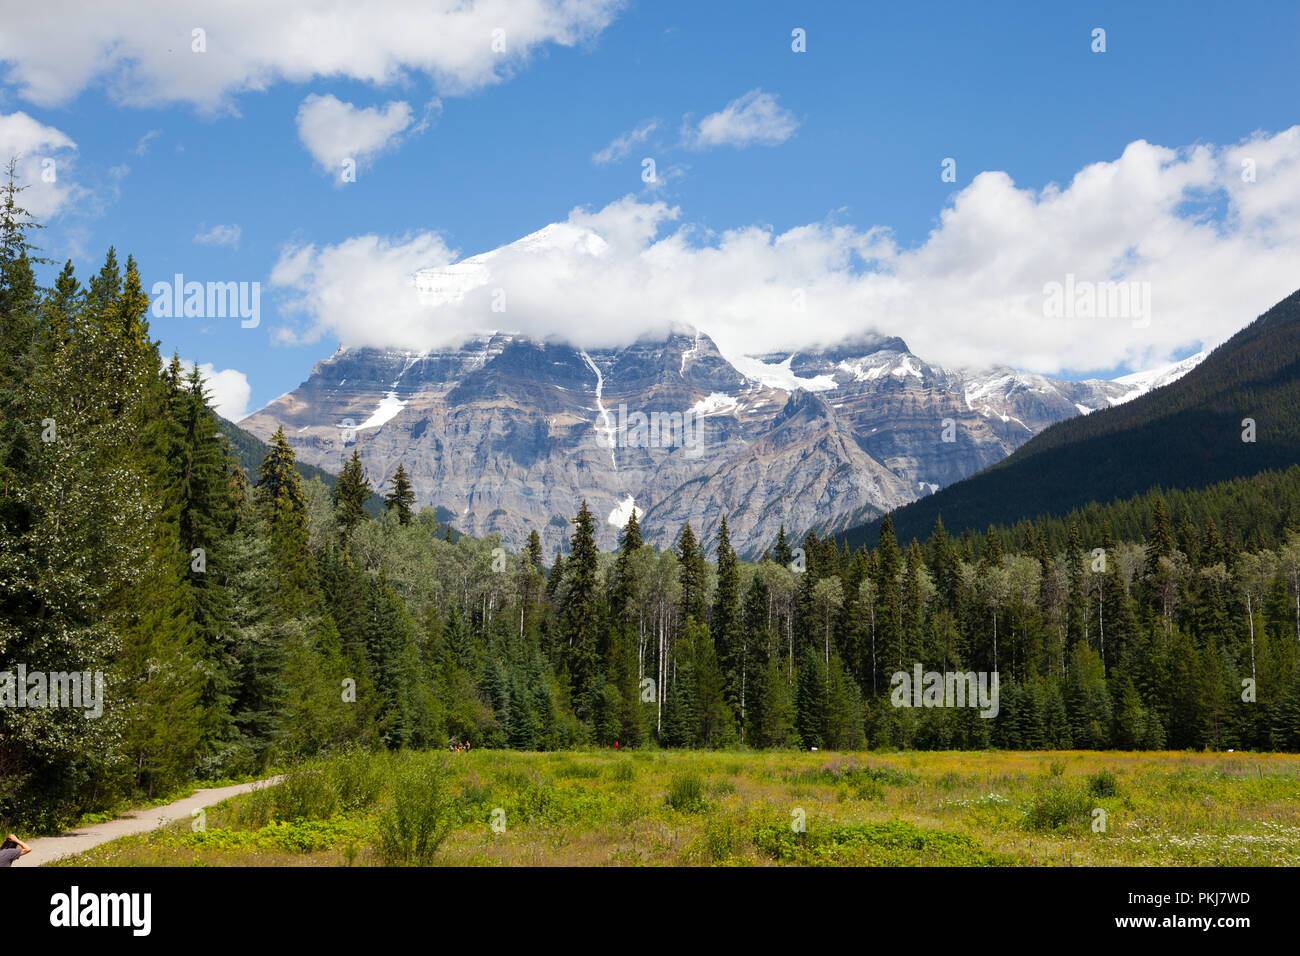 Mount Robson, the highest peak in British Columbia, Canada. Stock Photo